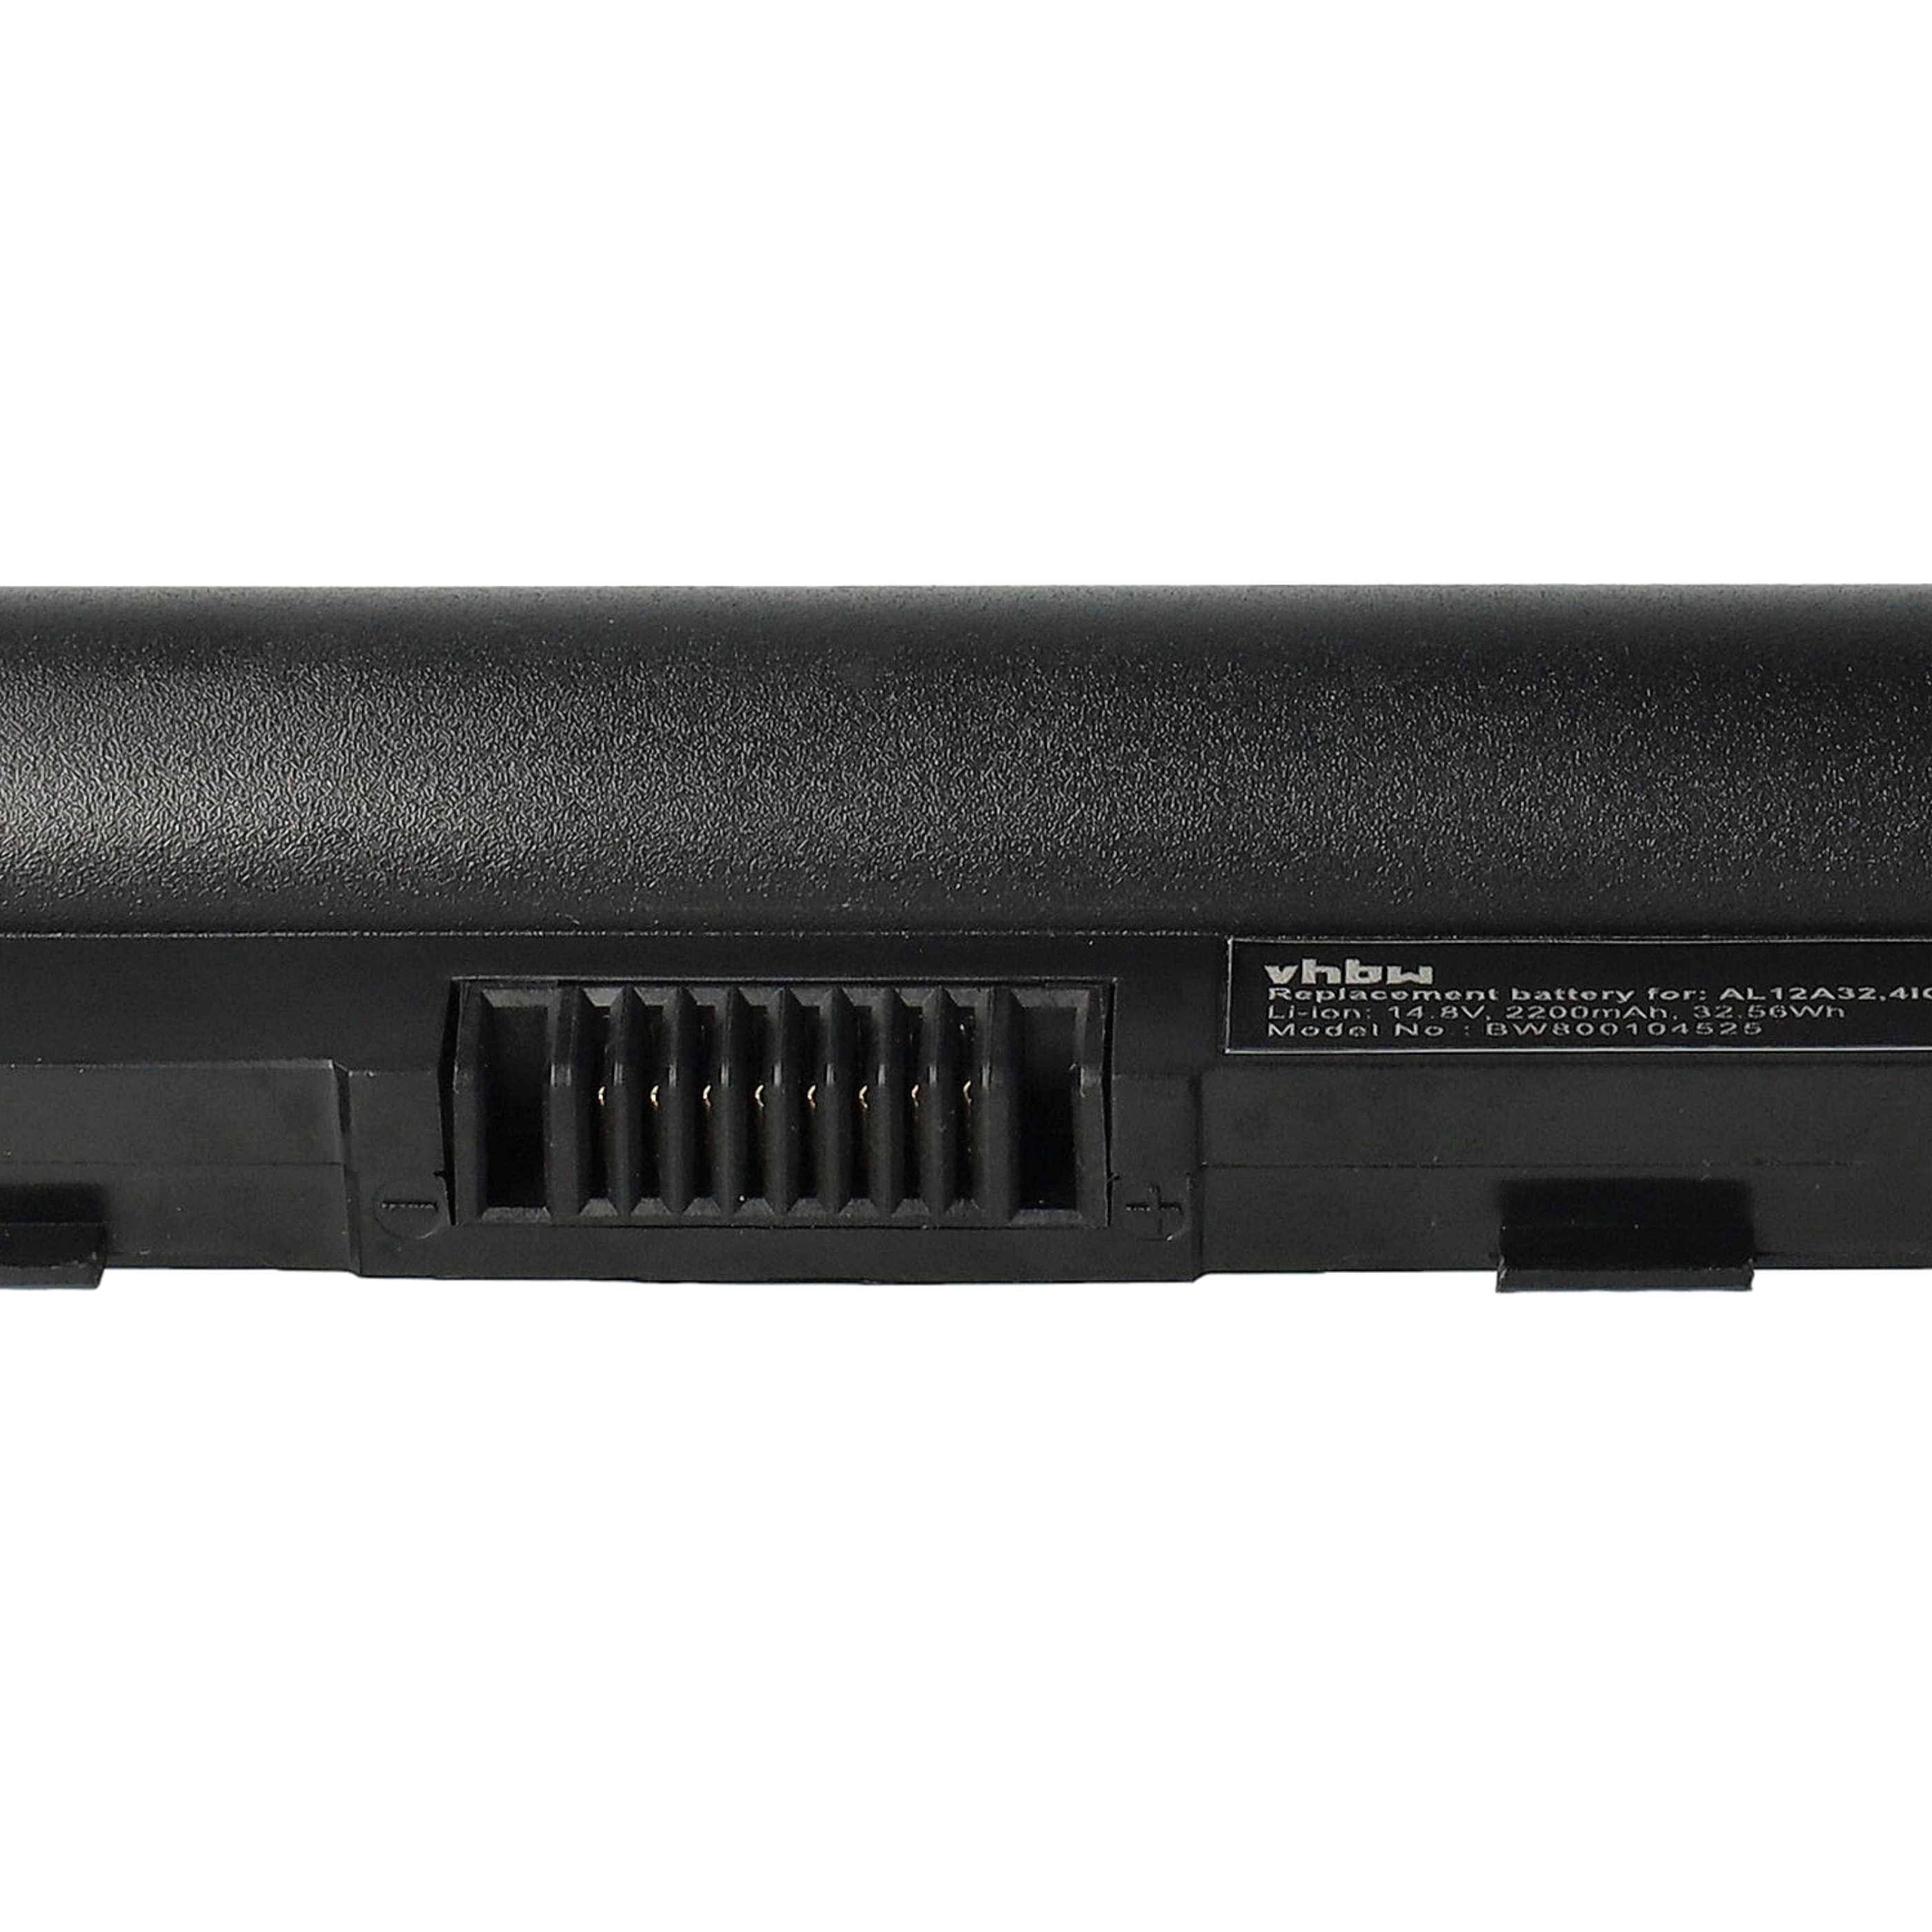 Akumulator do laptopa zamiennik Acer AL12A32, 4ICR17/65, AK.004BT.097 - 2200 mAh 14,4 V Li-Ion, czarny